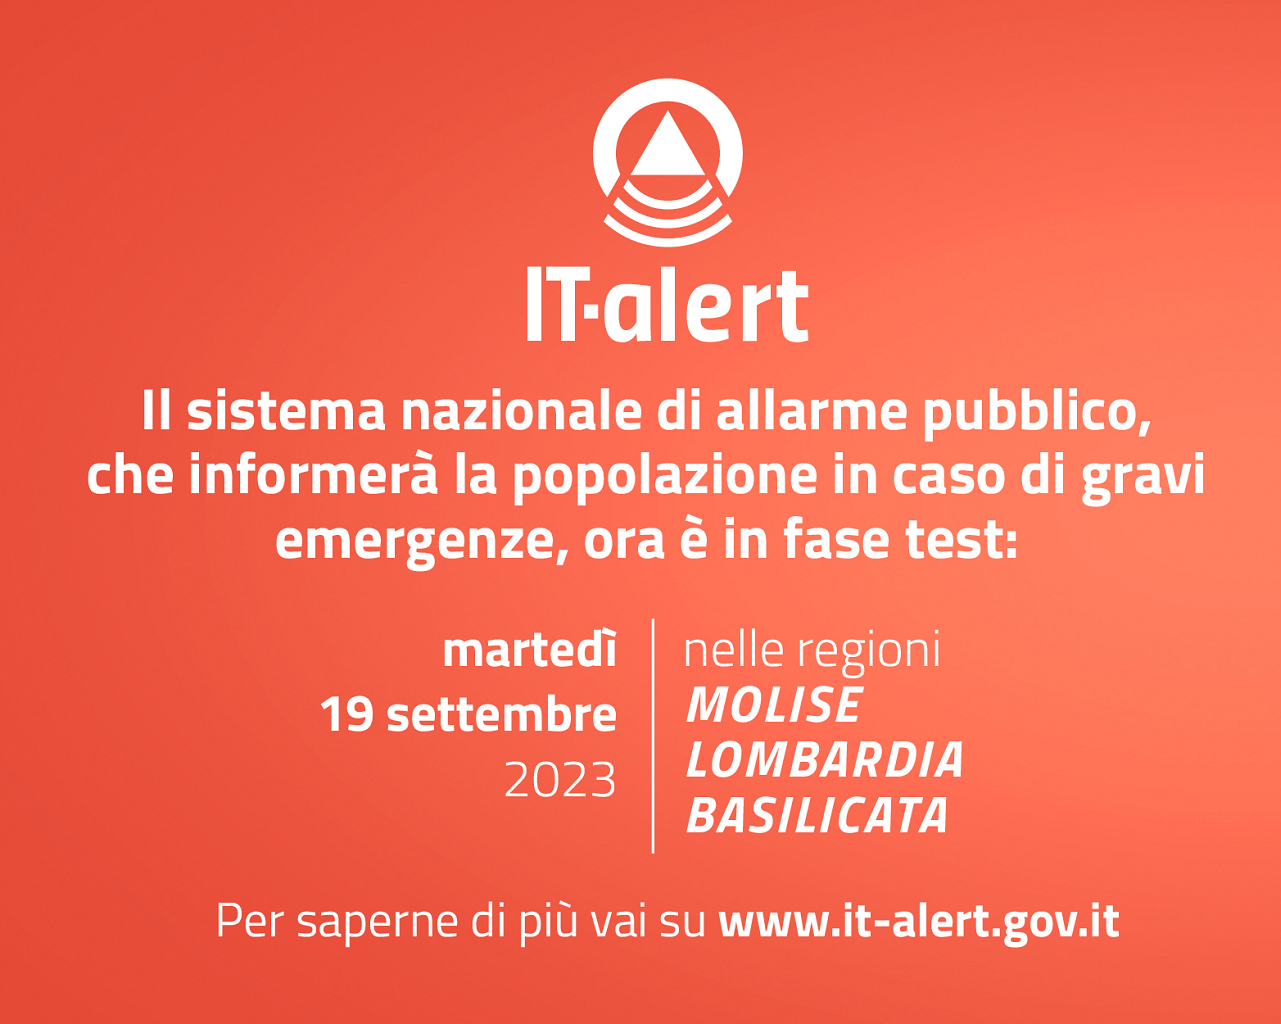 IT-Alert Lombardia